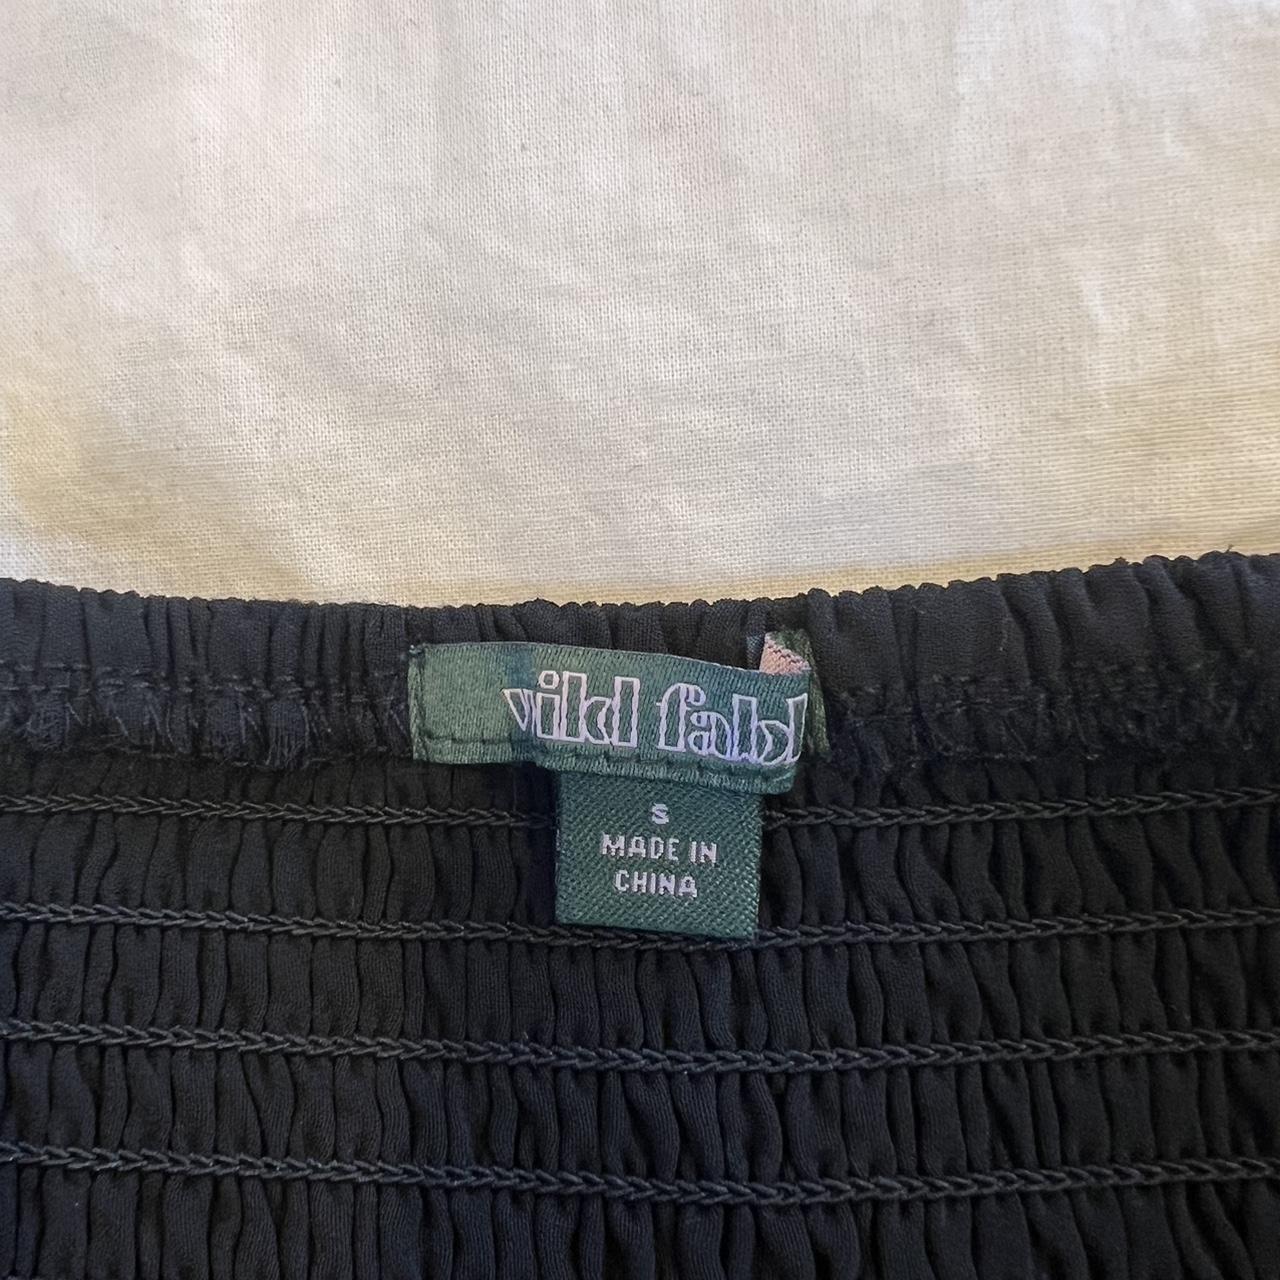 Wild Fable black skirt super cute size: S never worn - Depop